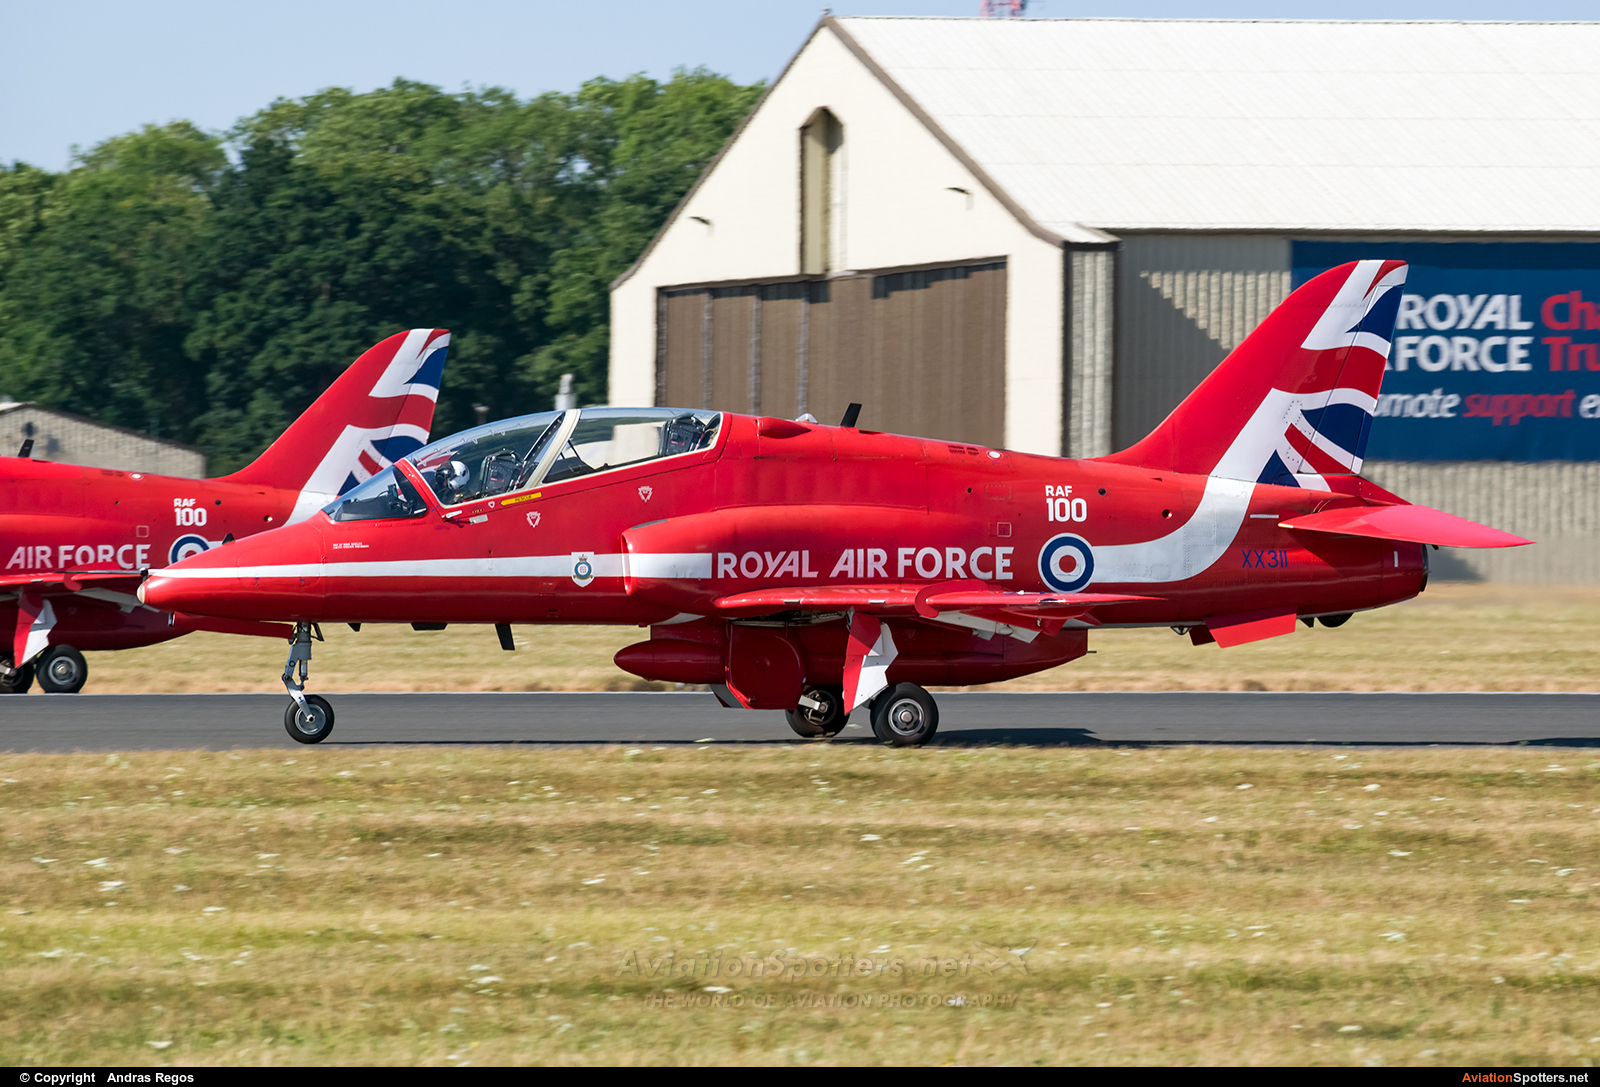 UK - Air Force: Red Arrows  -  Hawk T.1- 1A  (XX311) By Andras Regos (regos)